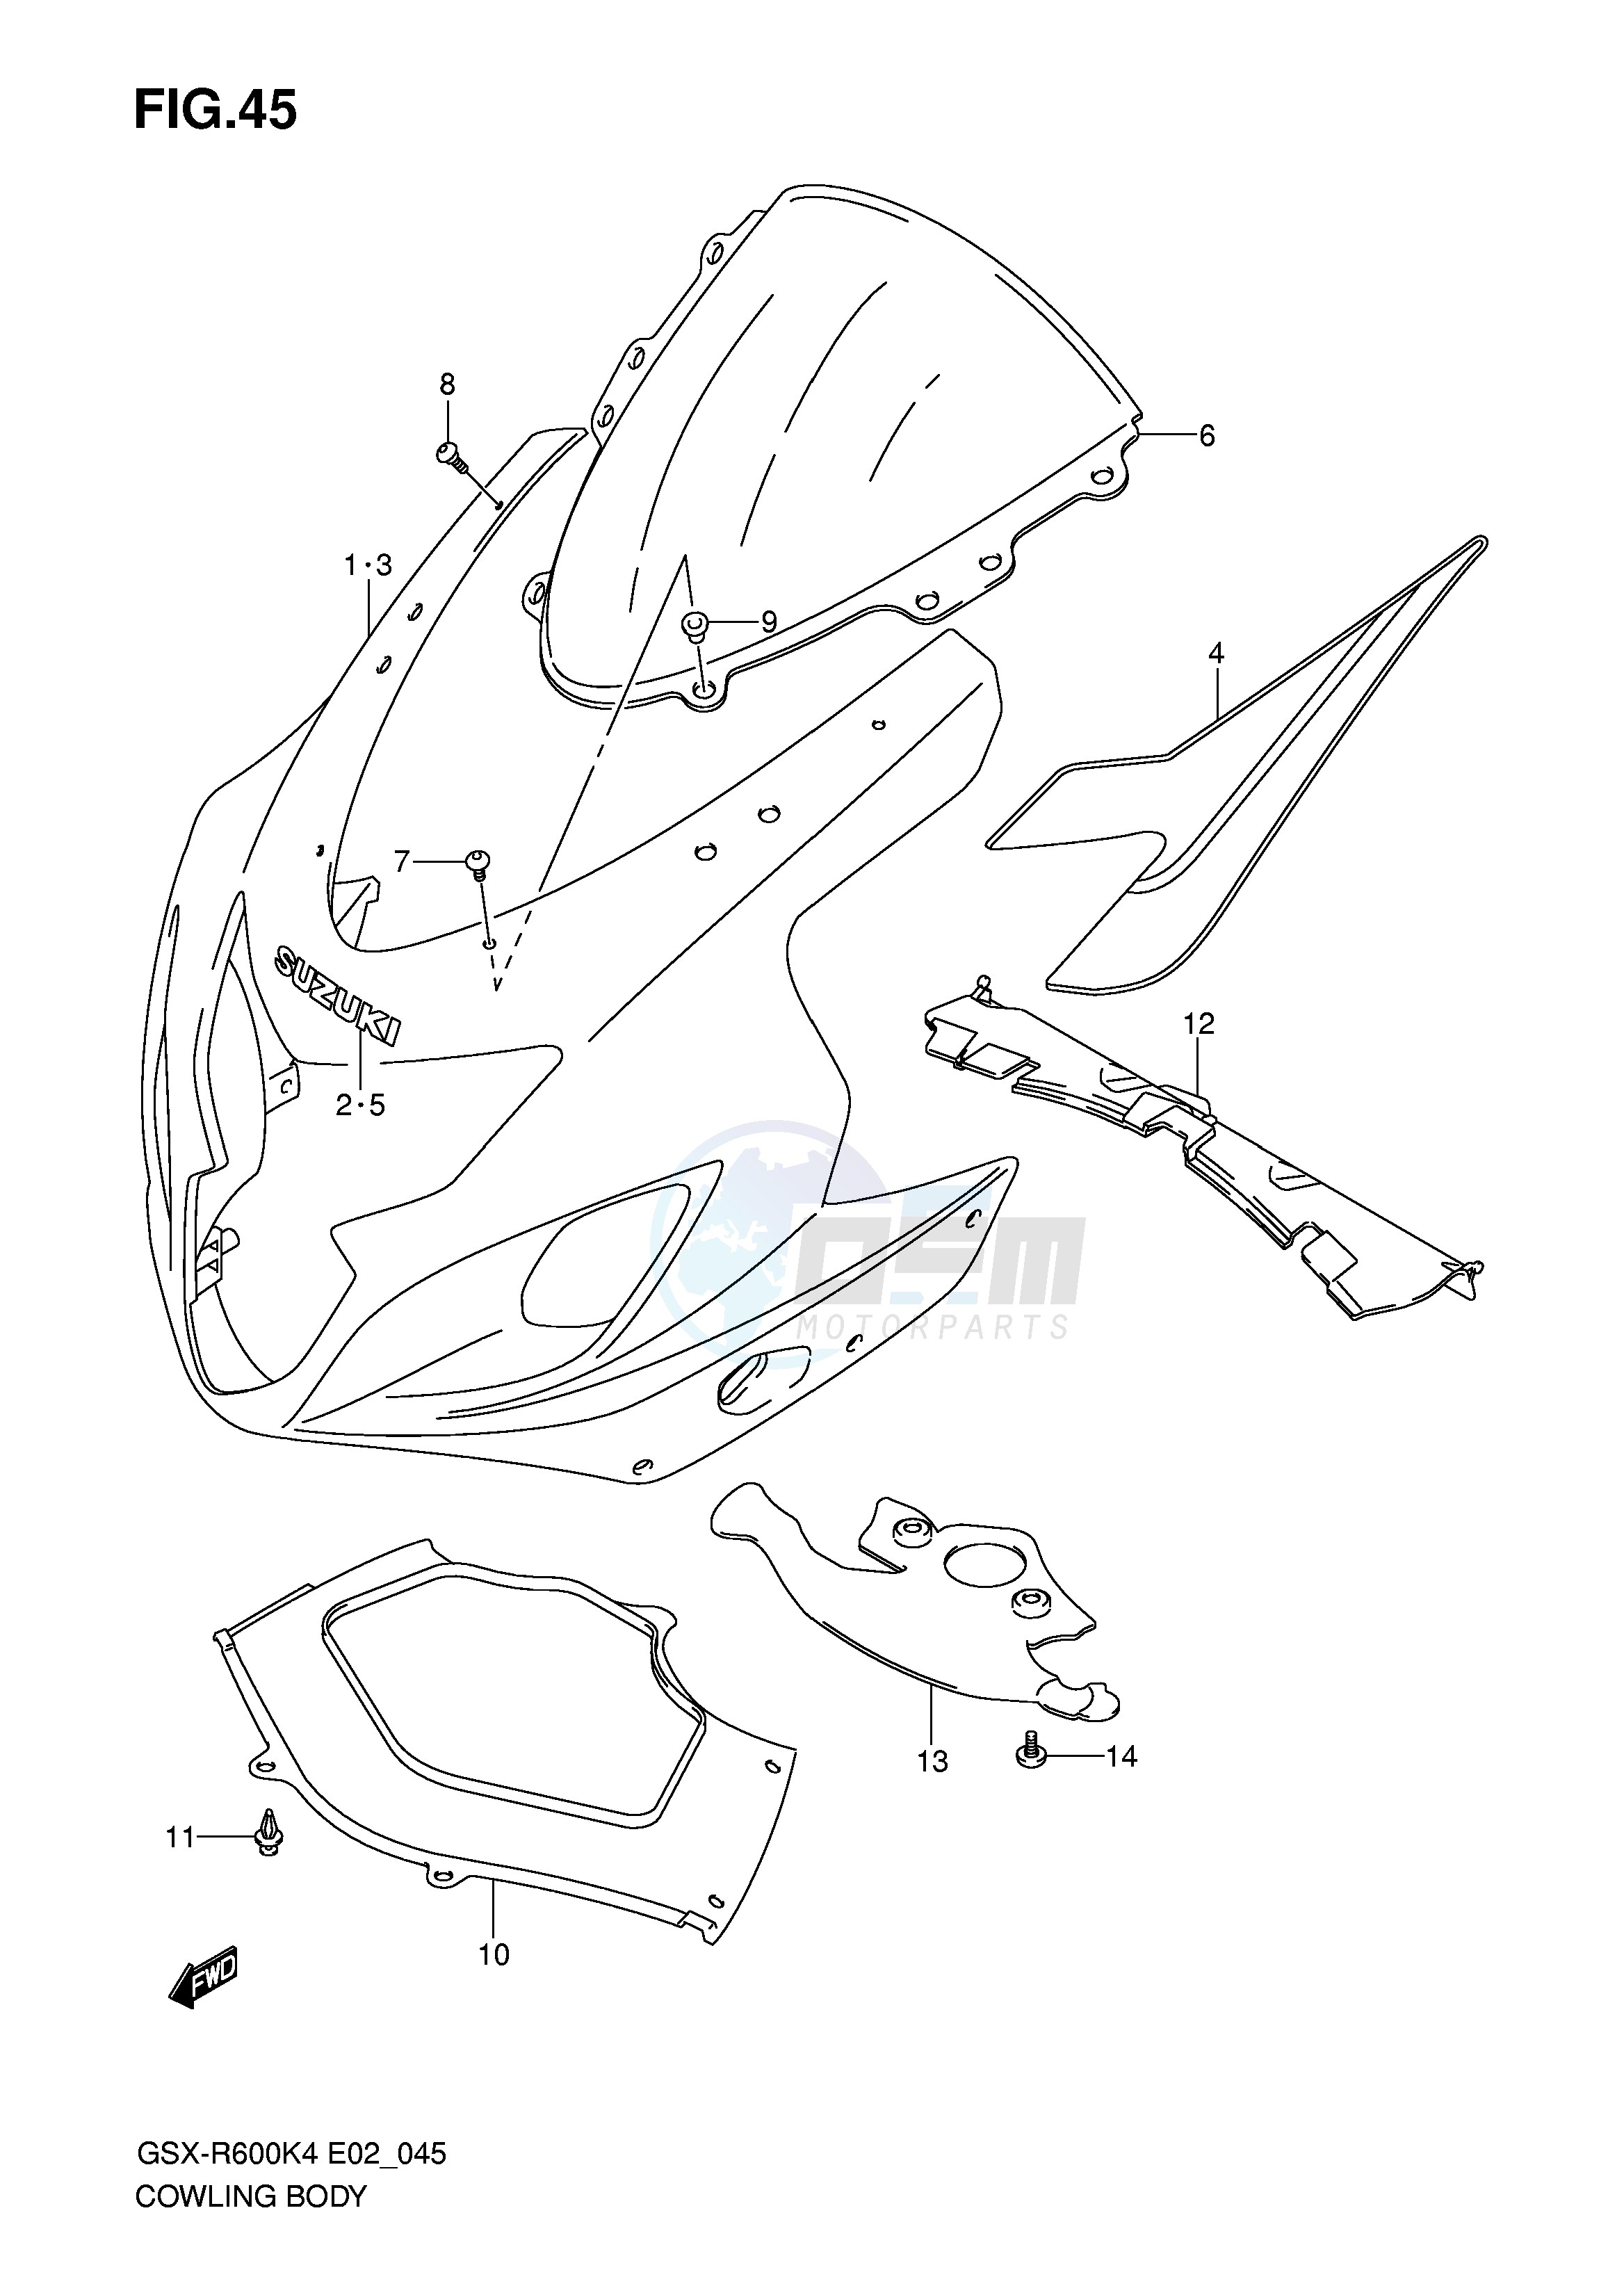 COWLING BODY (GSX-R600K4 K5) blueprint